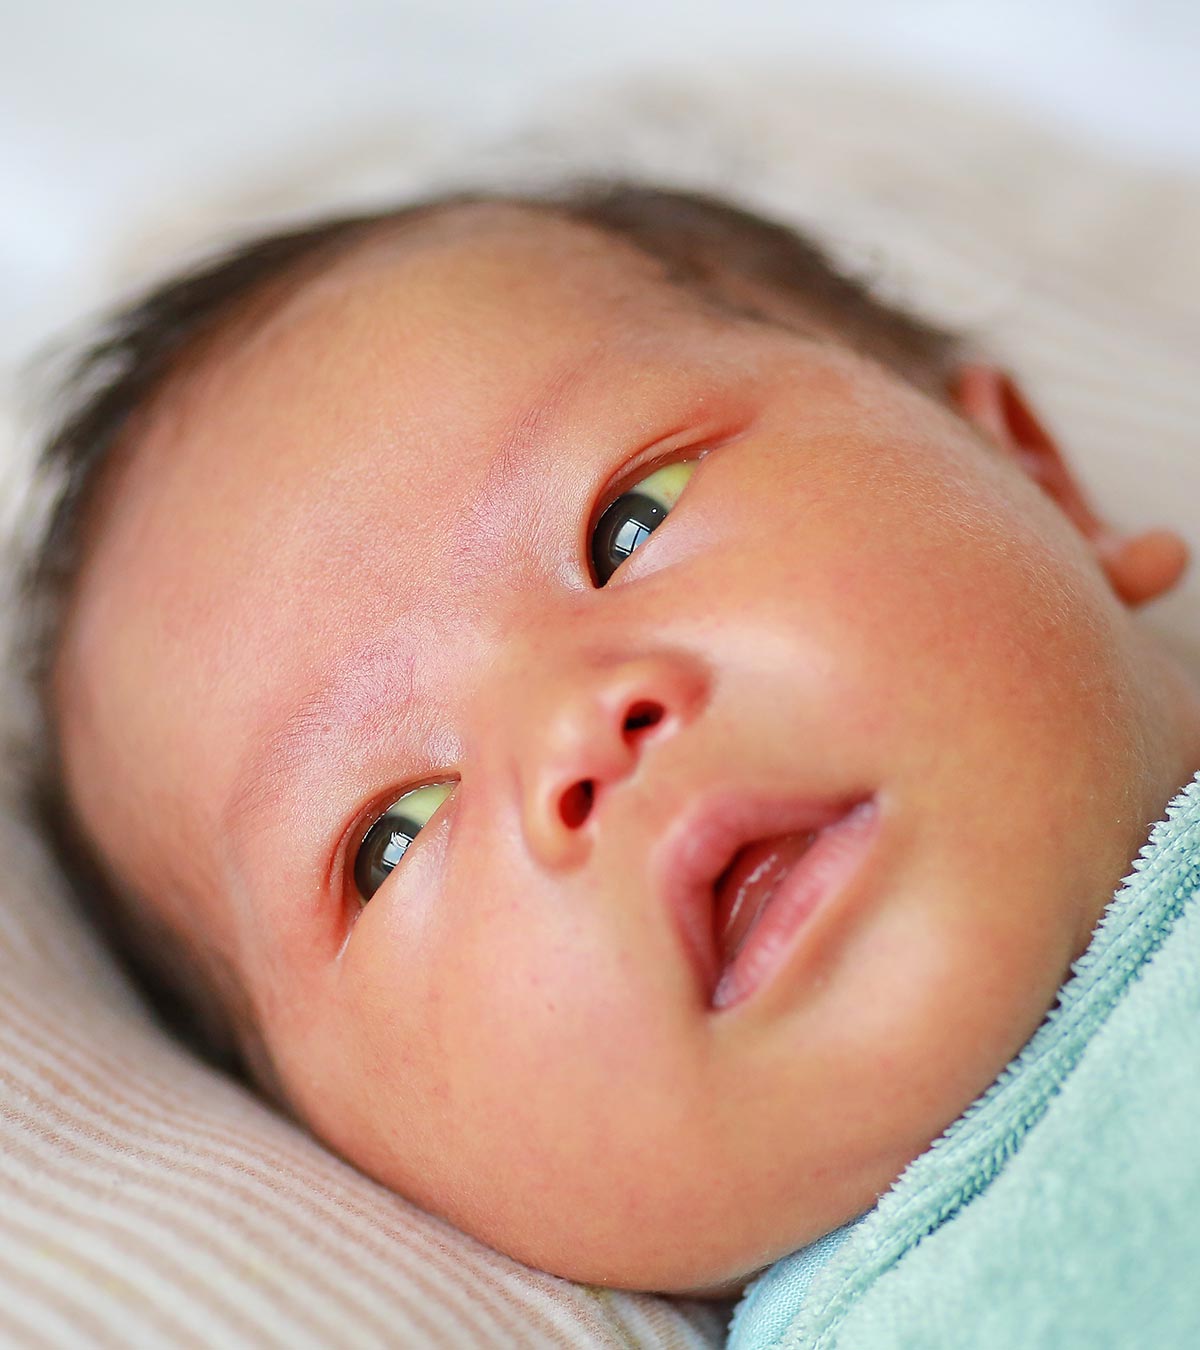 Biliary Atresia In Newborns: Symptoms, Causes And Treatment